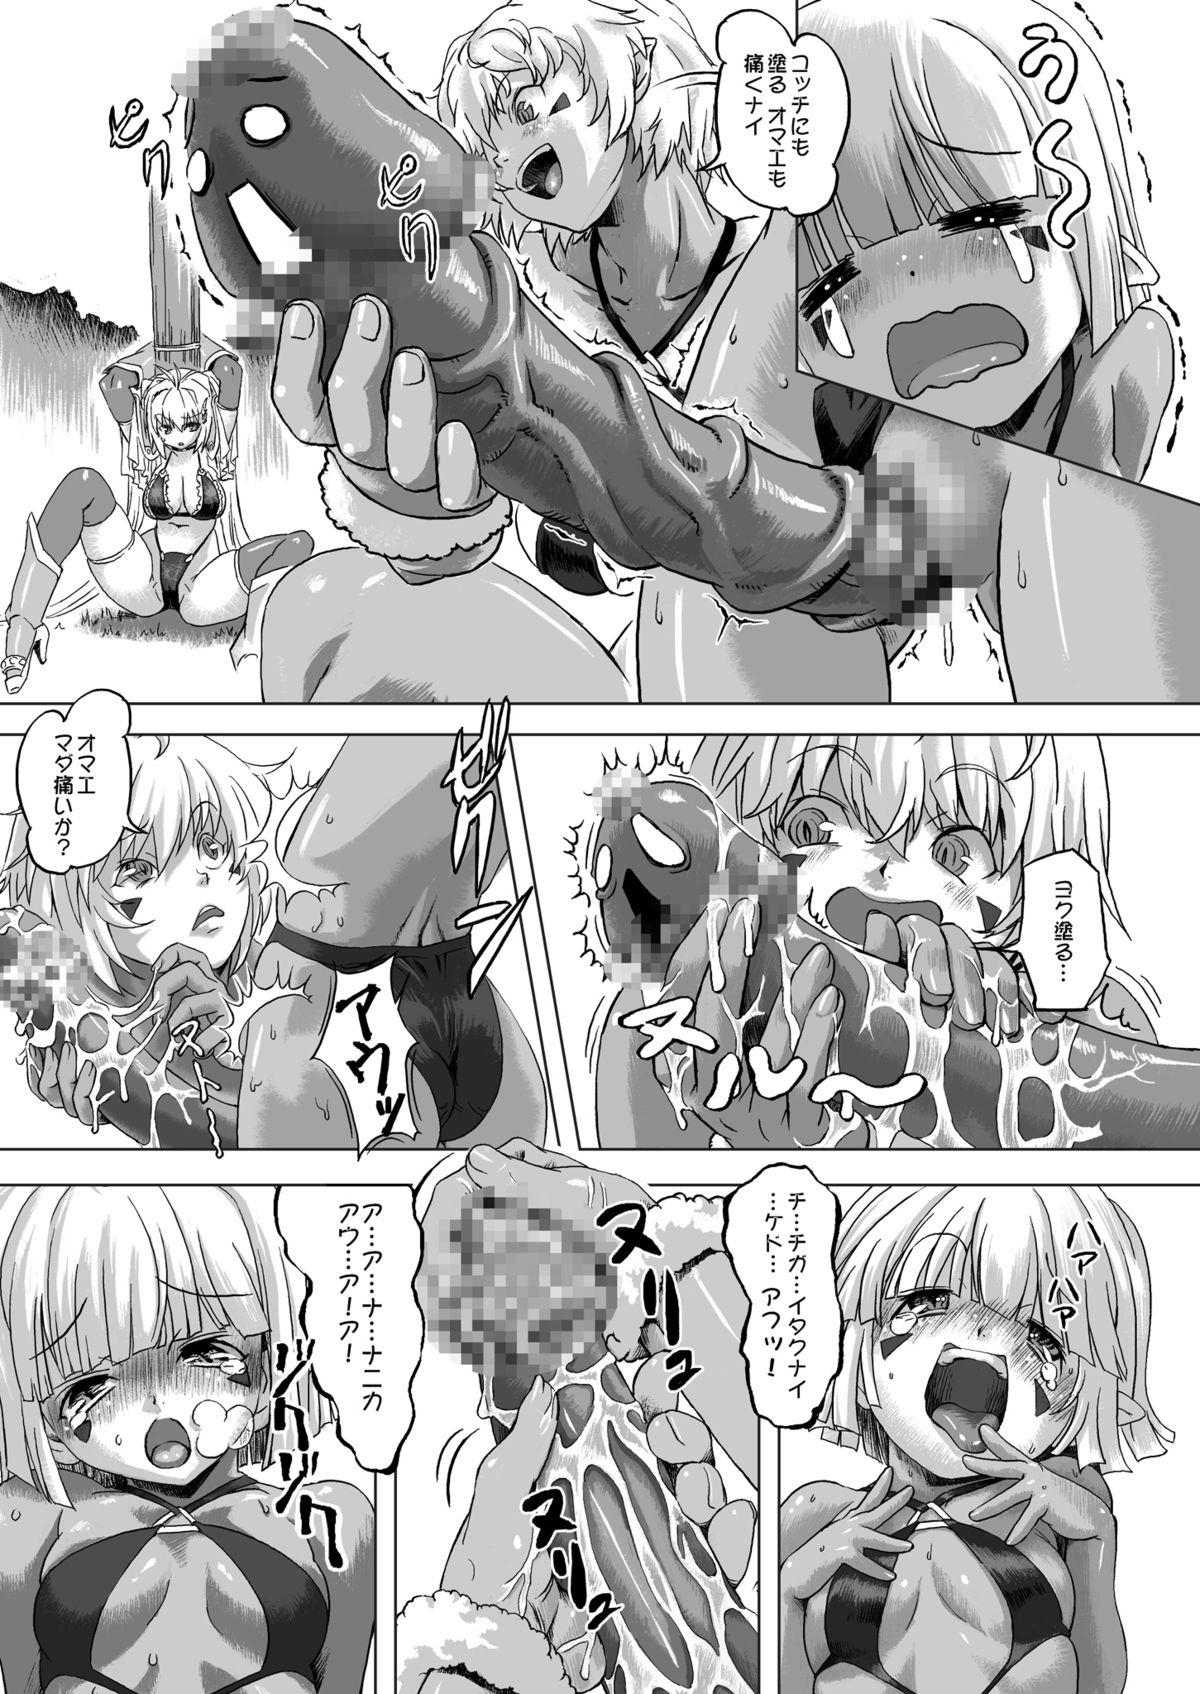 Topless Zoku Senshi vs. - Dragon quest iii Hungarian - Page 7